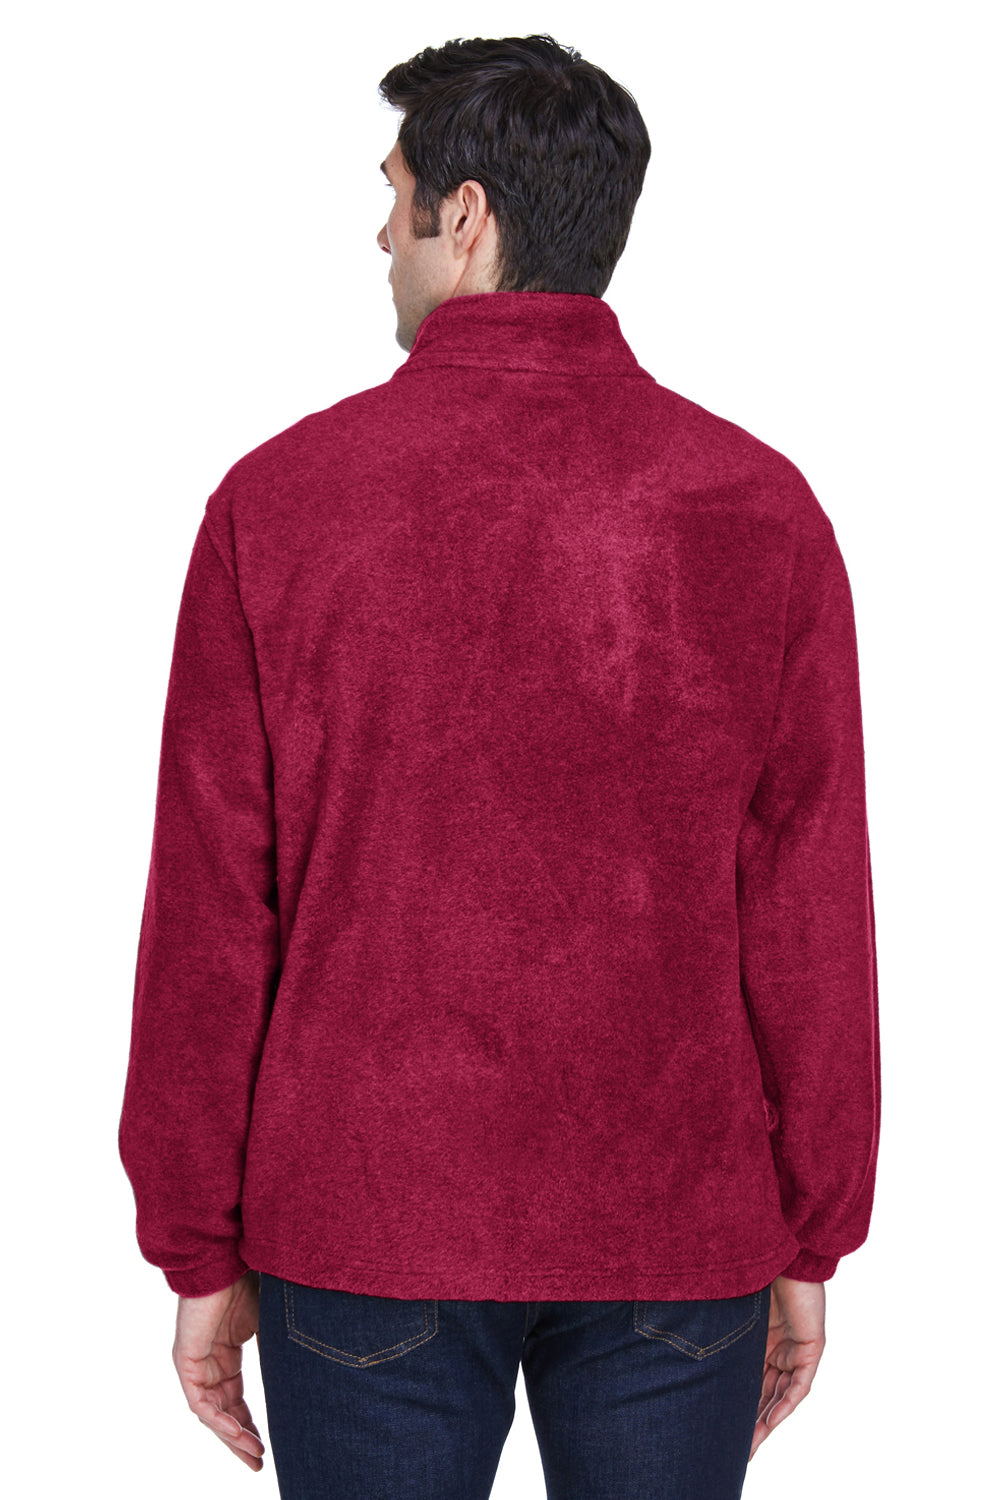 Harriton M990 Mens Full Zip Fleece Jacket Wine Red Back